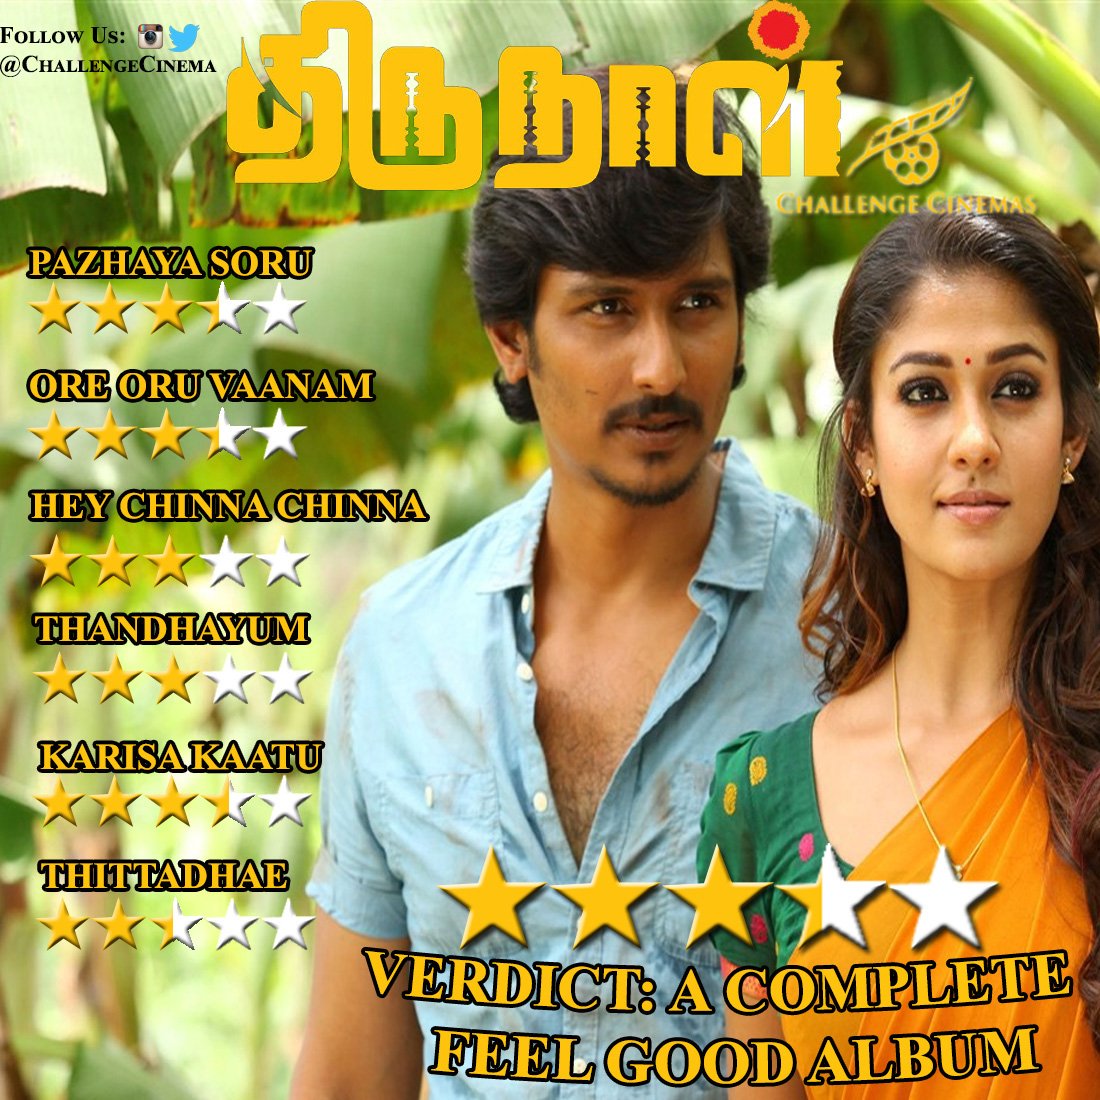 #Thirunaal A Complete Feel good Album 💕💕 @Actorjiiva @thesrikanthdeva @ThenandalFilms @proyuvraaj @NayantharaU